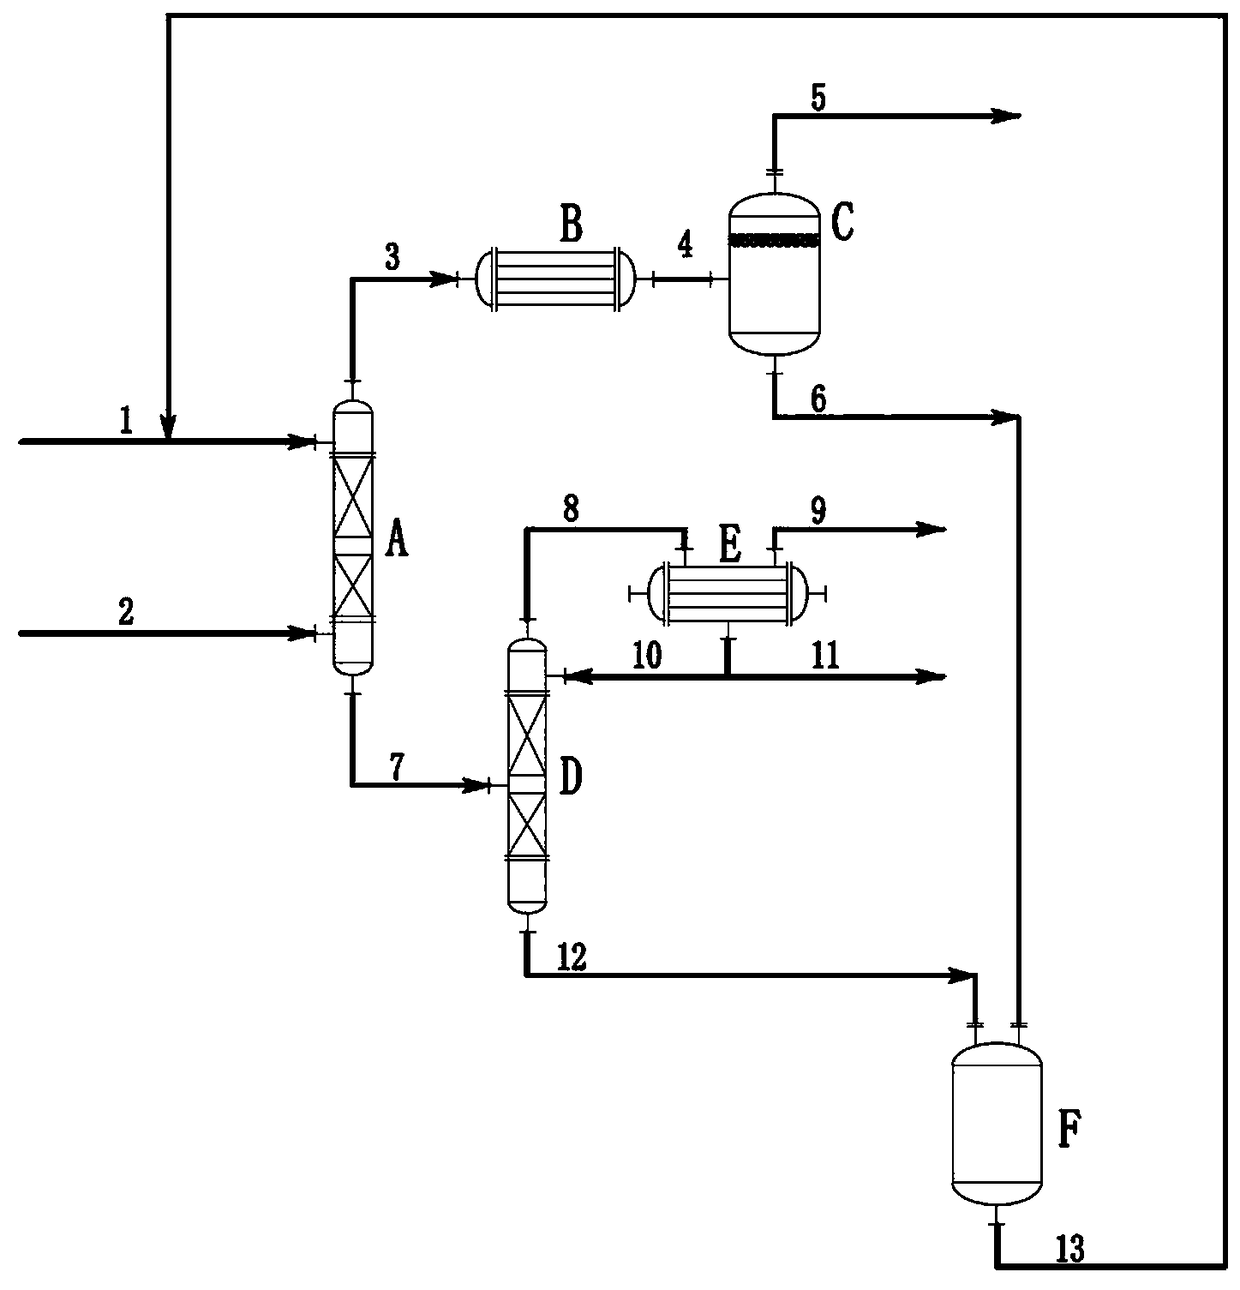 Method for recovering methyl chloride from methyl chloride waste gas